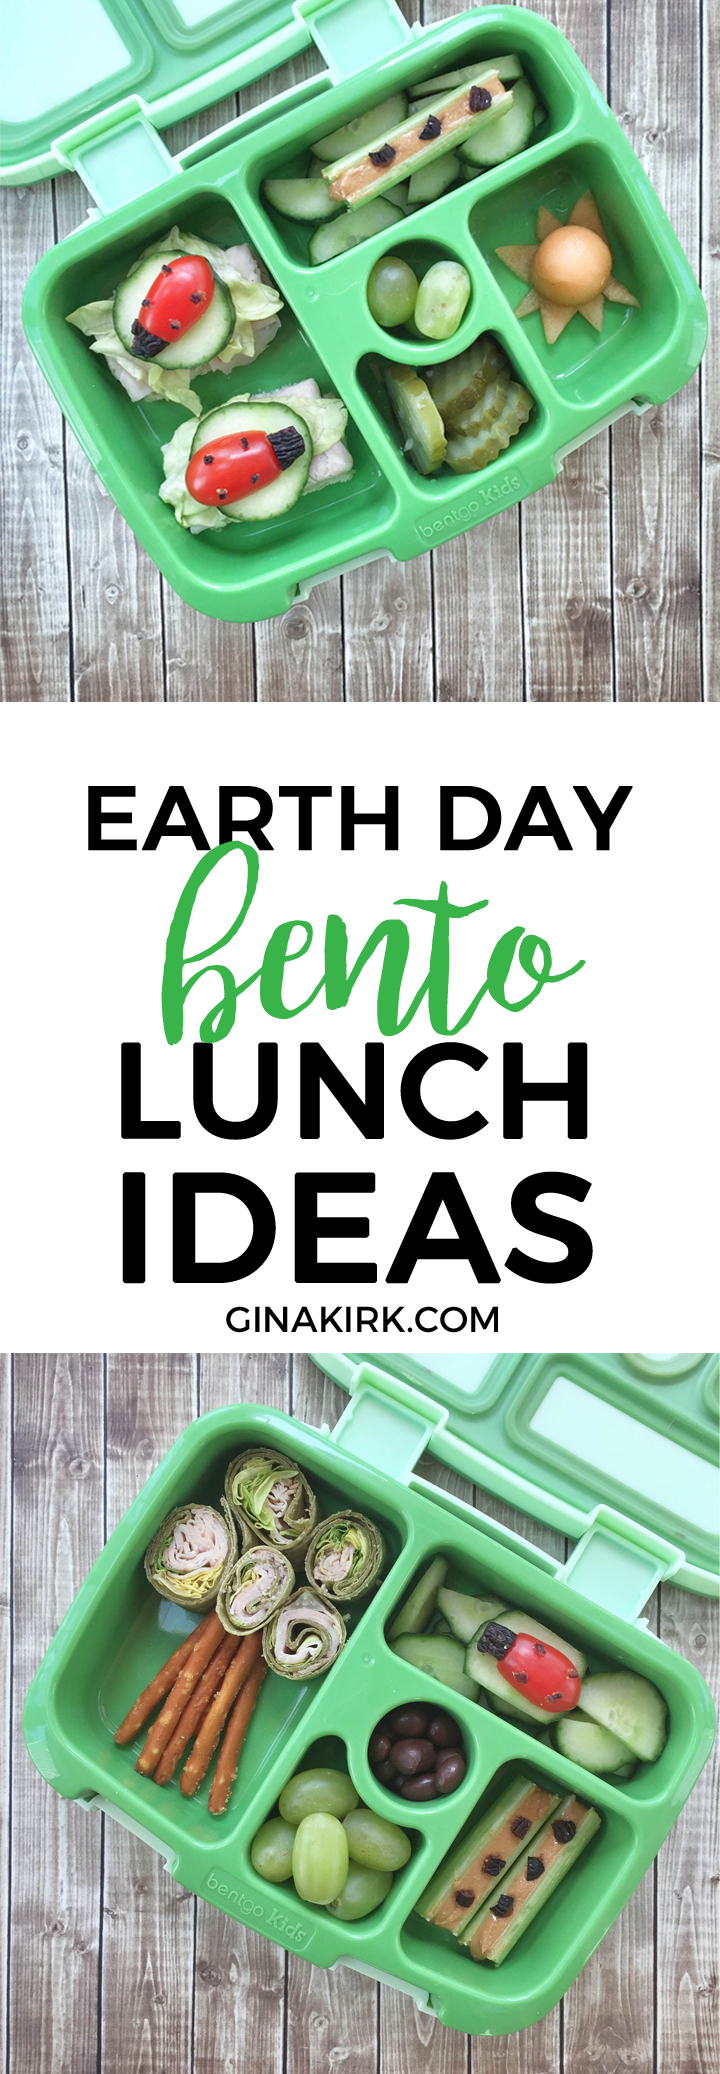 Earth day fun food ideas | Earth day lunchbox fun | Bento ideas for kids on Earth Day | Earth Day lunch | GinaKirk.com @ginaekirk